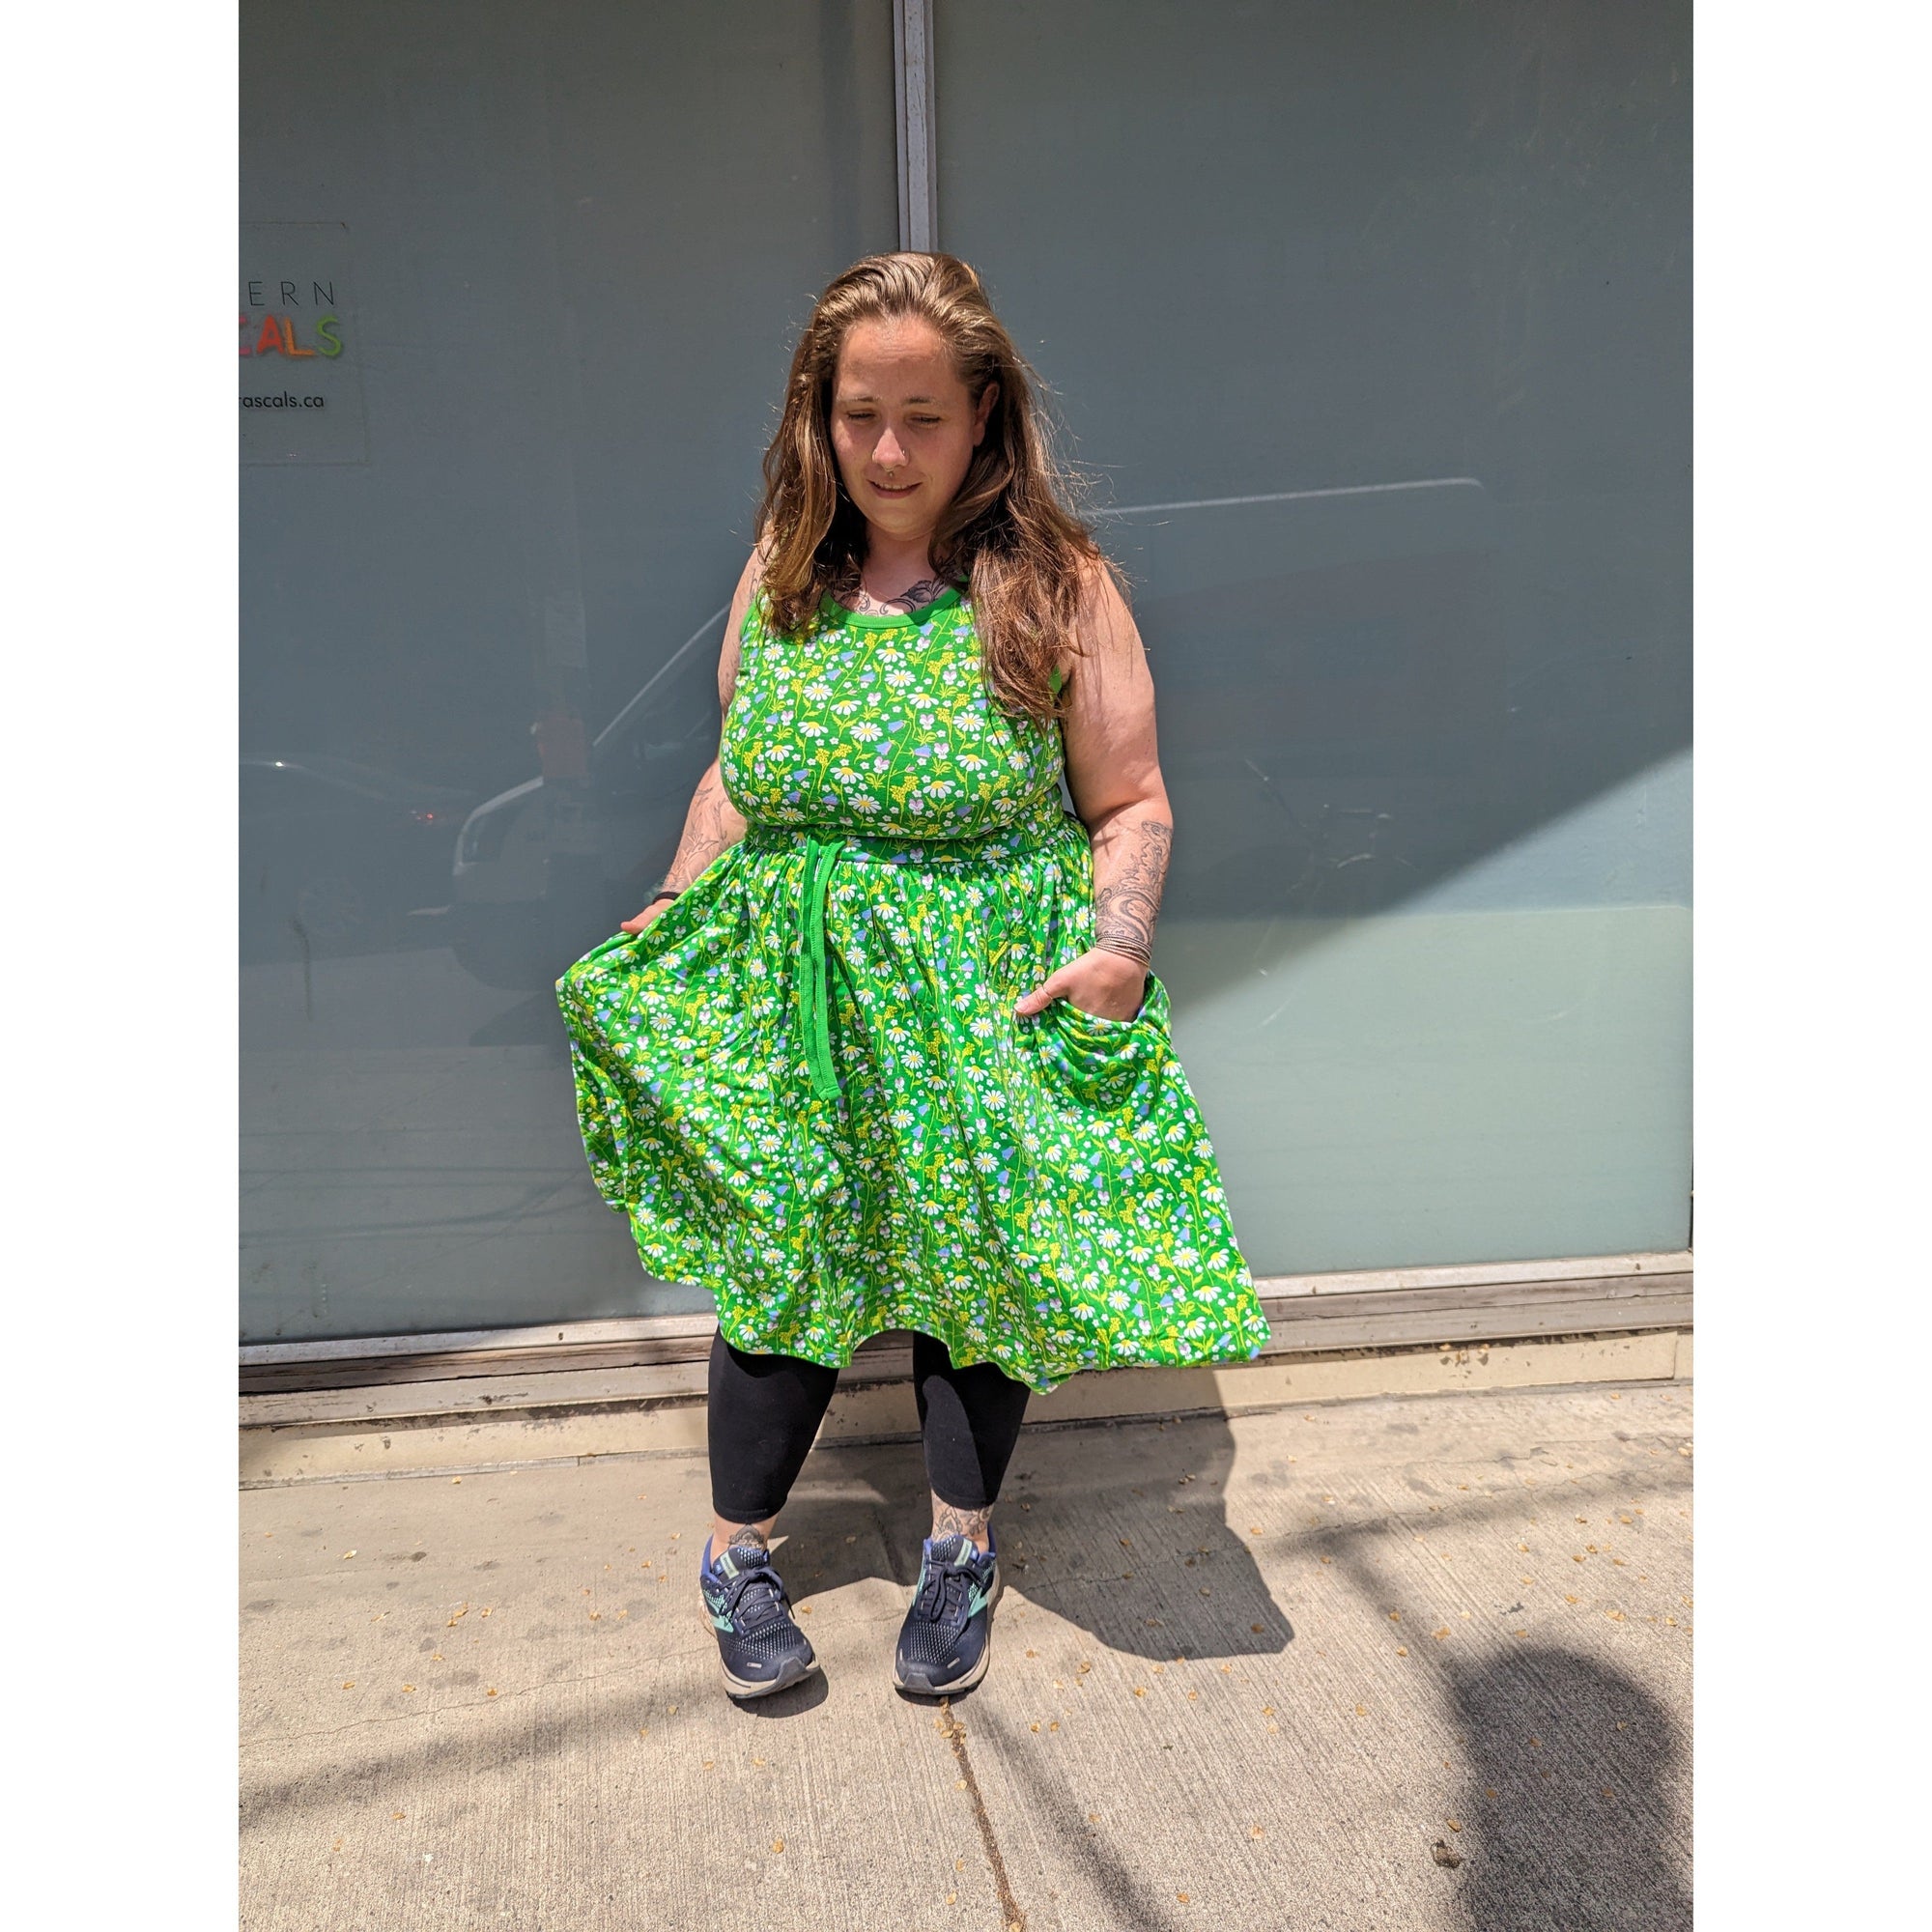 Adult's Summer Days - Green Sleeveless Dress With Gathered Skirt - 2 Left Size L & 2XL-Duns Sweden-Modern Rascals